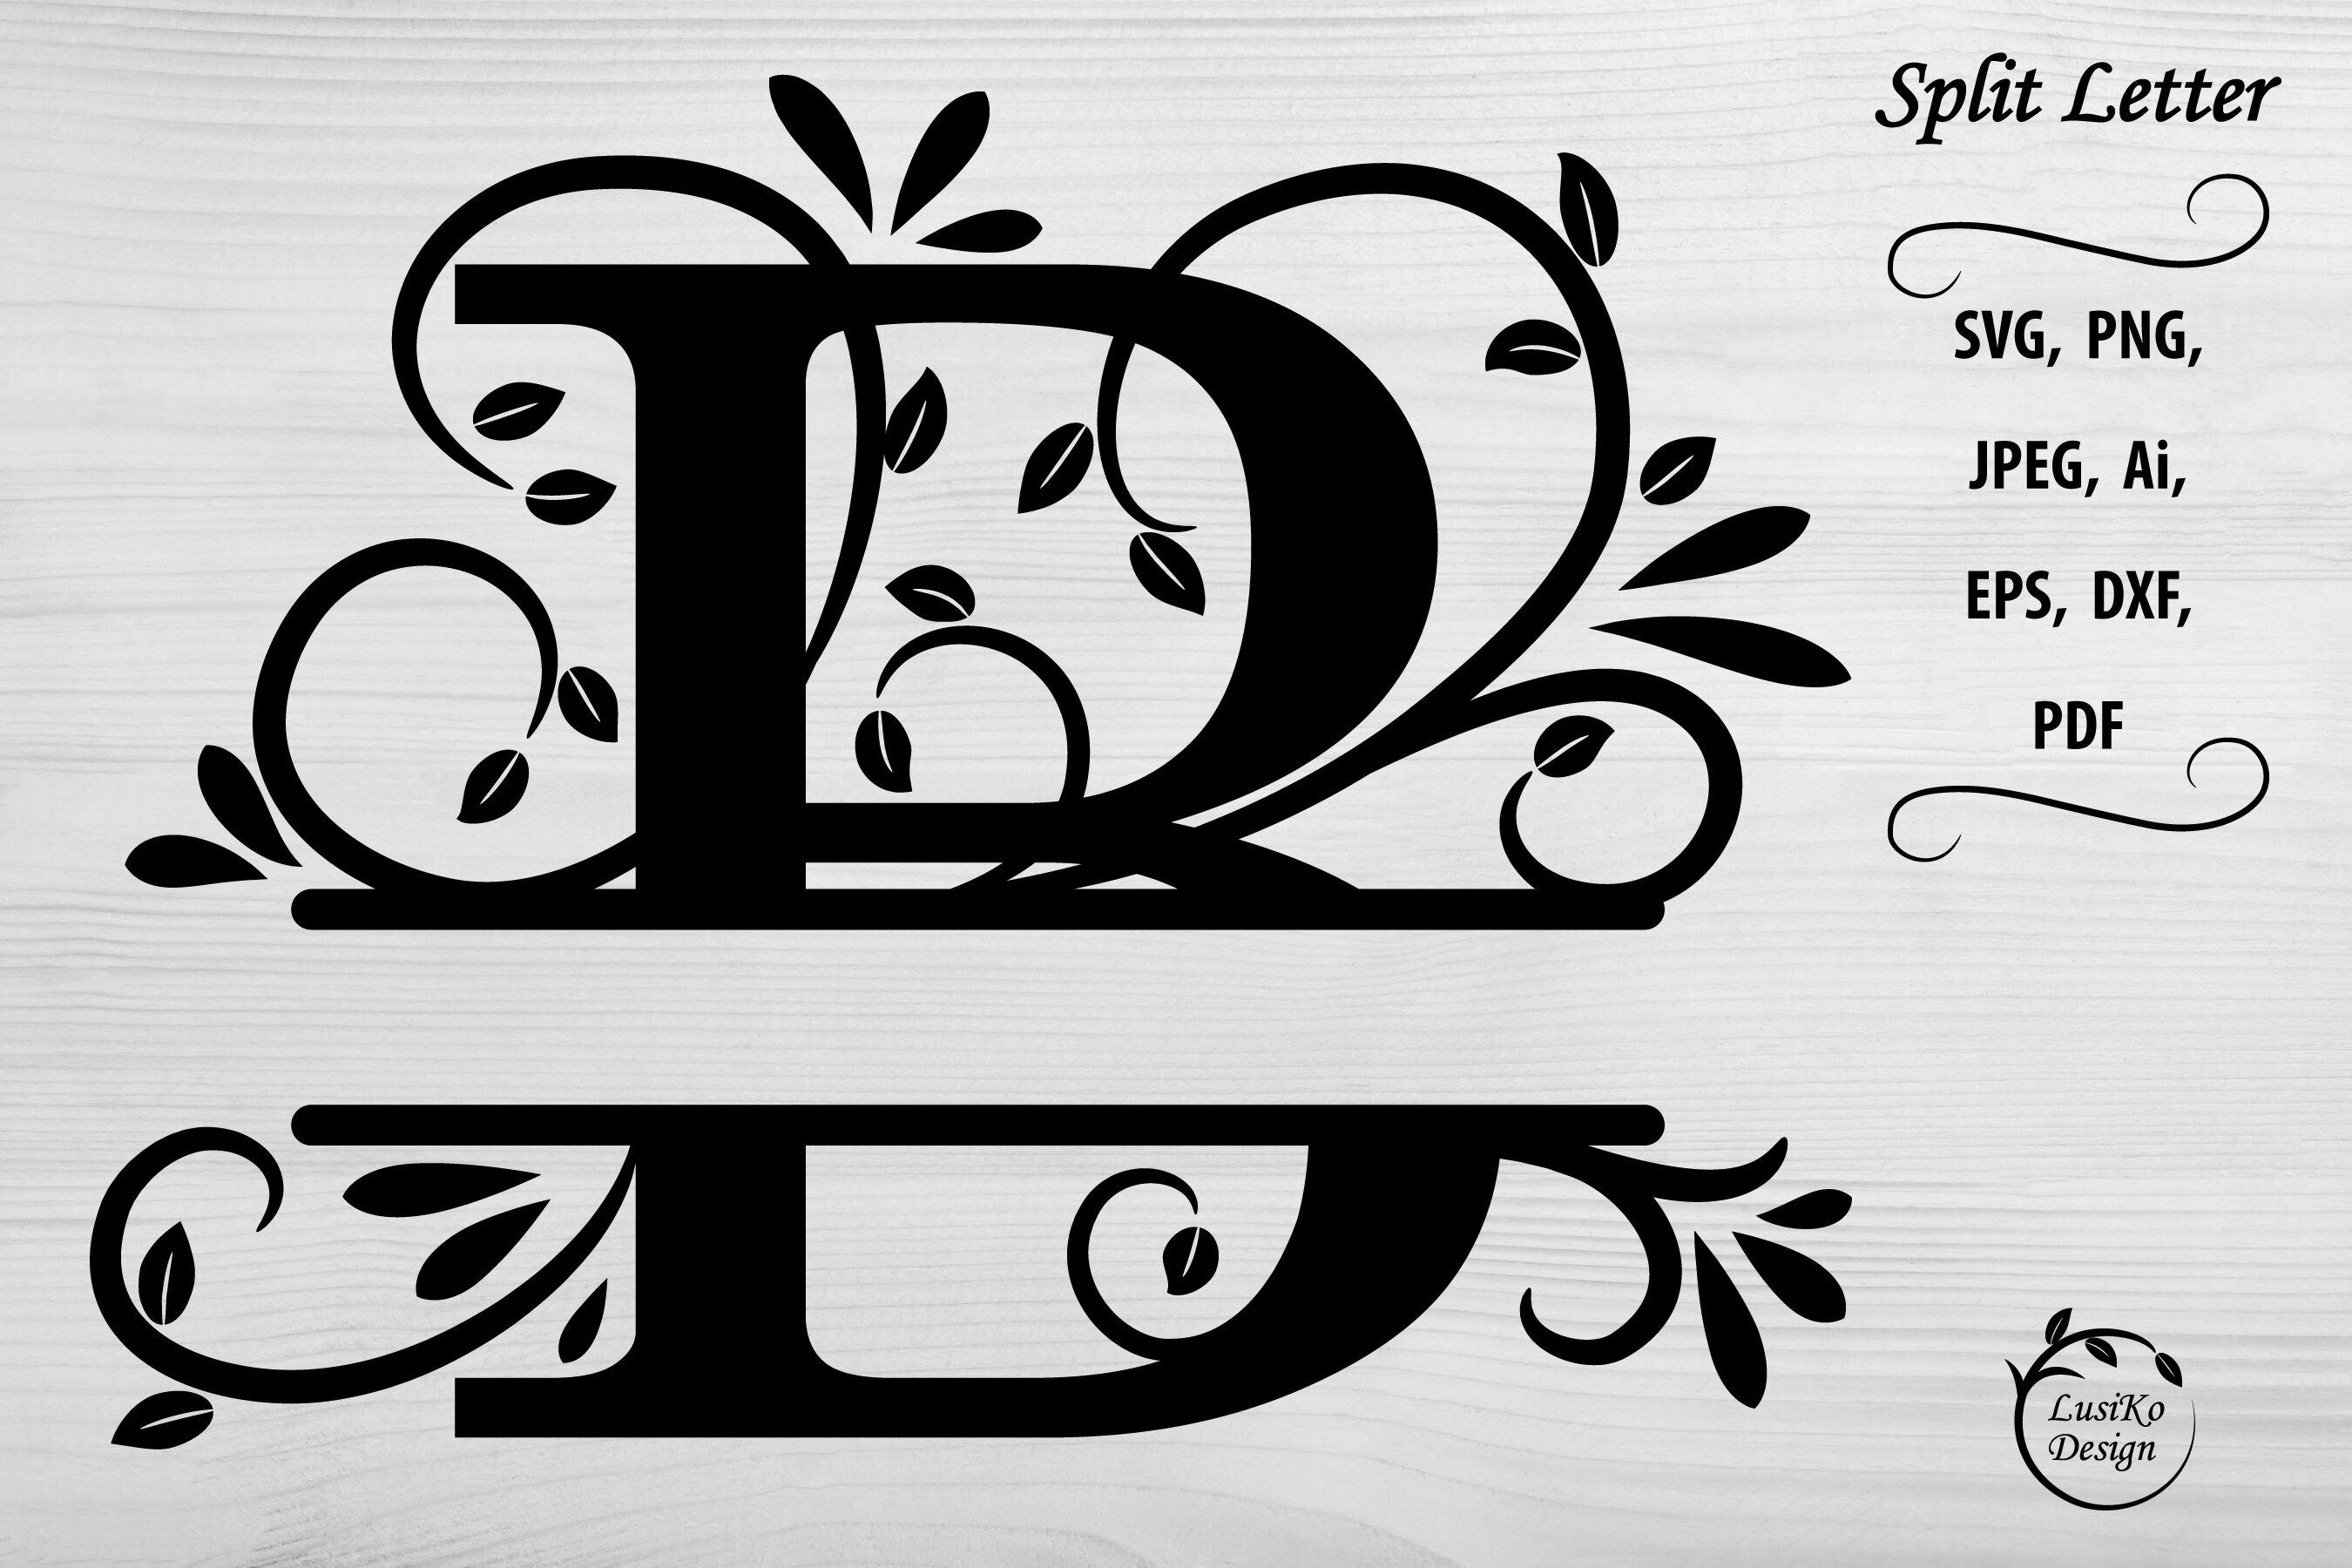 Split Letter B Monogram Vector Alphabet Letters SVG PNG By LusiKo Design TheHungryJPEG